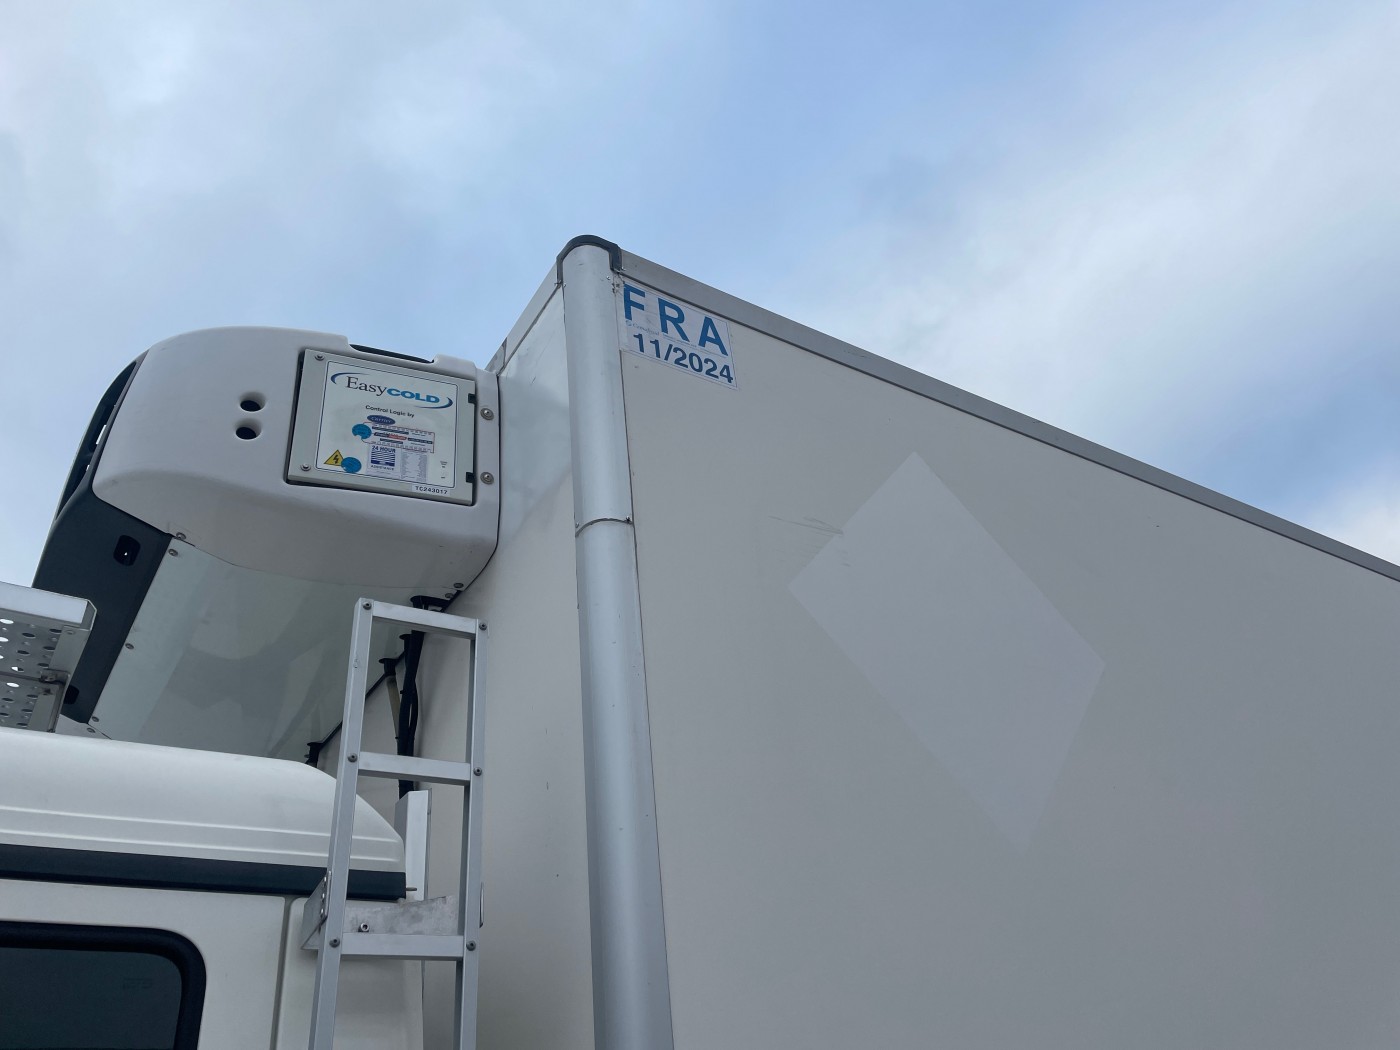 MAN TGL 10.220 Cabină dublă Camion frigider Lift hidraulic 1,5 T  FRA 11/2024